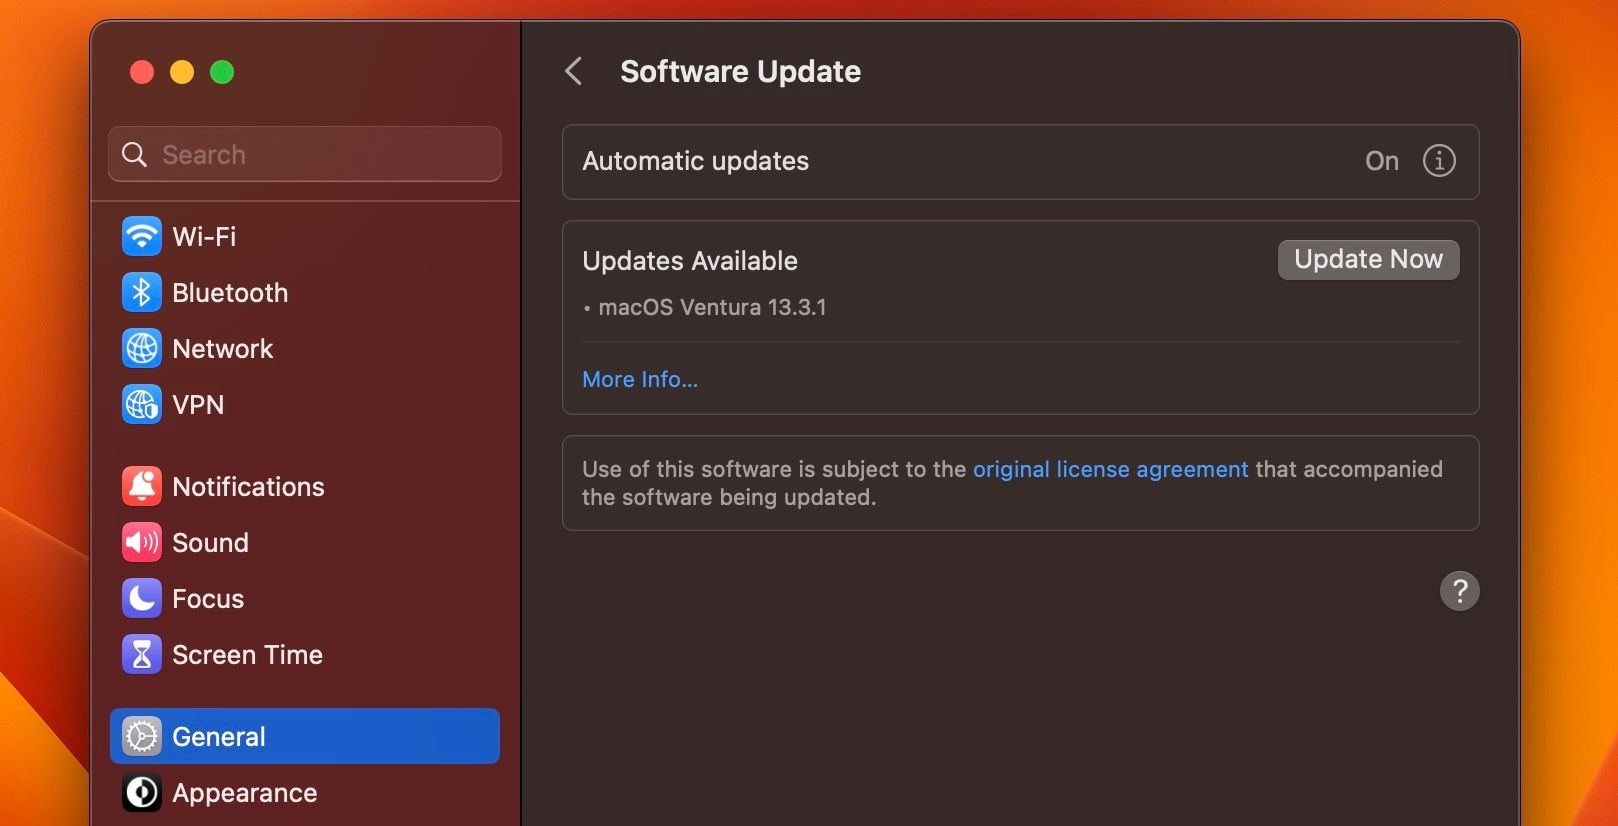 Software Update menu in macOS Ventura